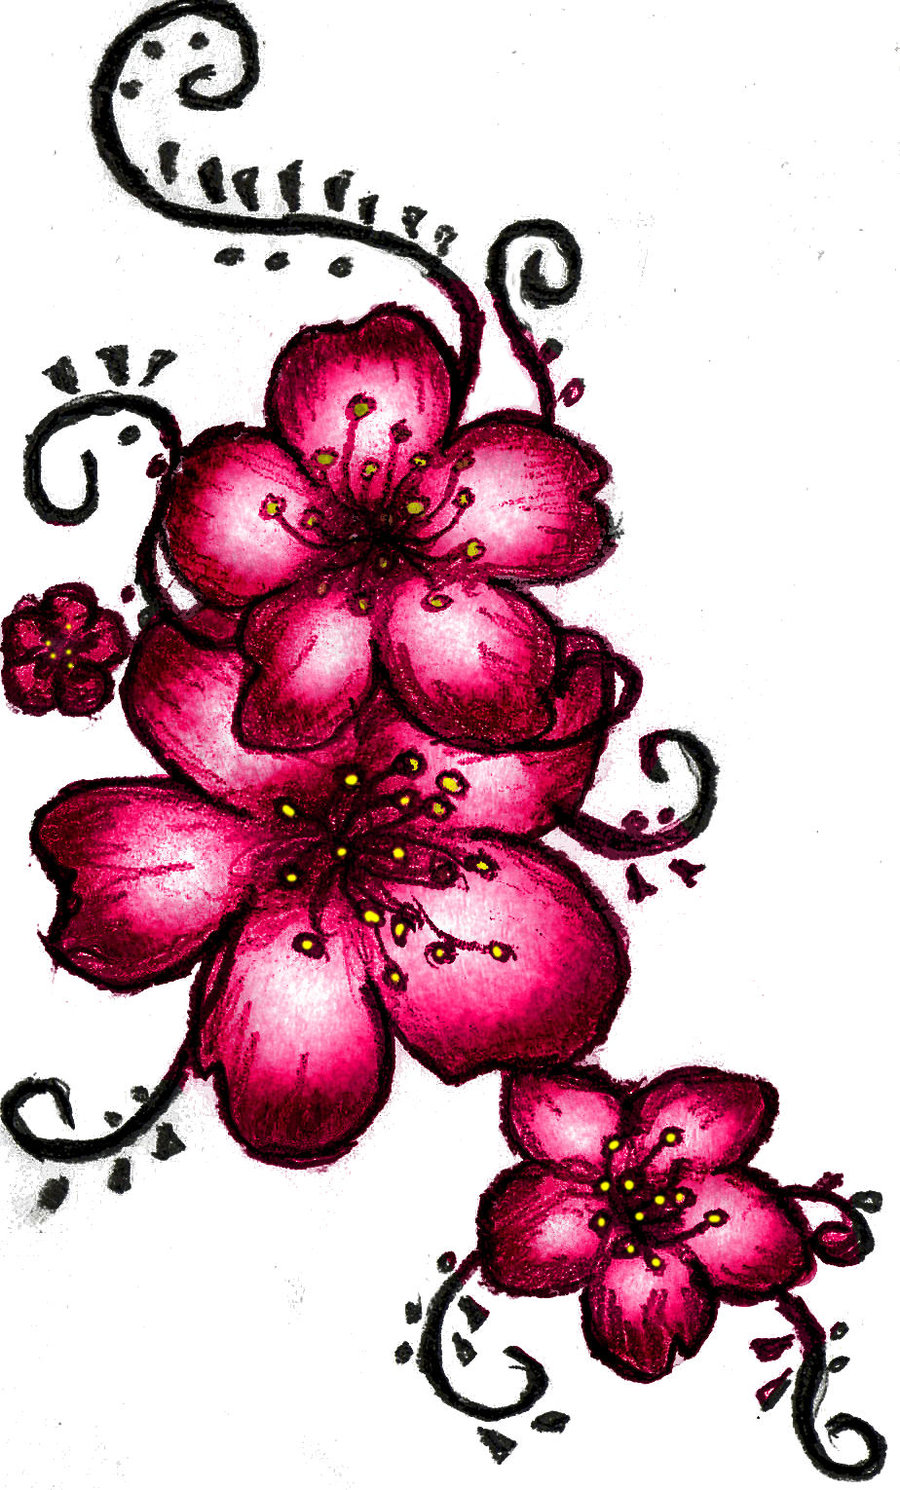 deviantART: More Like Cherry Blossom Henna Tattoo by LSD-ForTheMasses